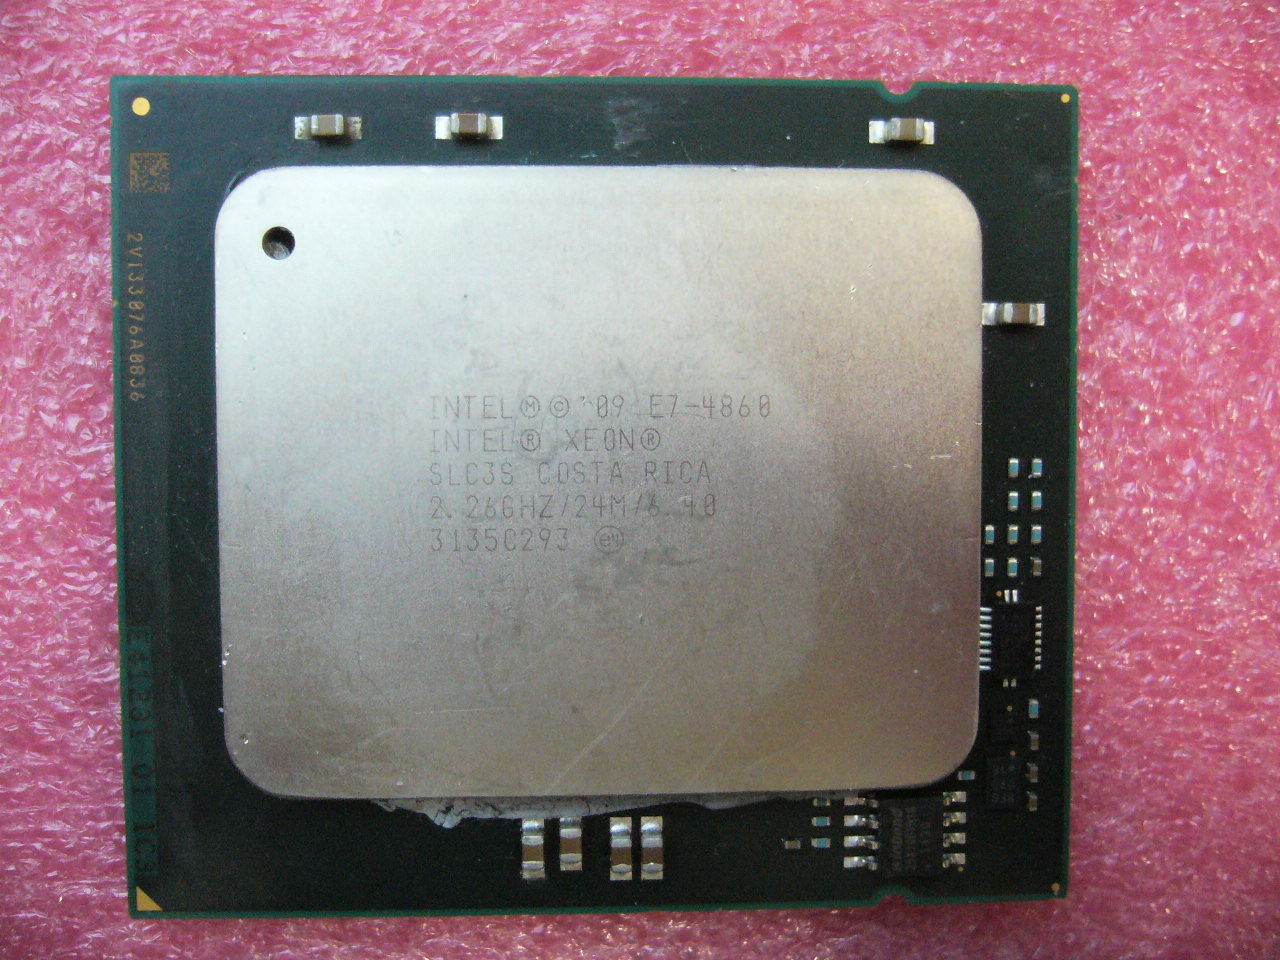 QTY 1x INTEL Ten-Cores CPU E7-4860 2.26GHZ/24MB LGA1567 SLC3S